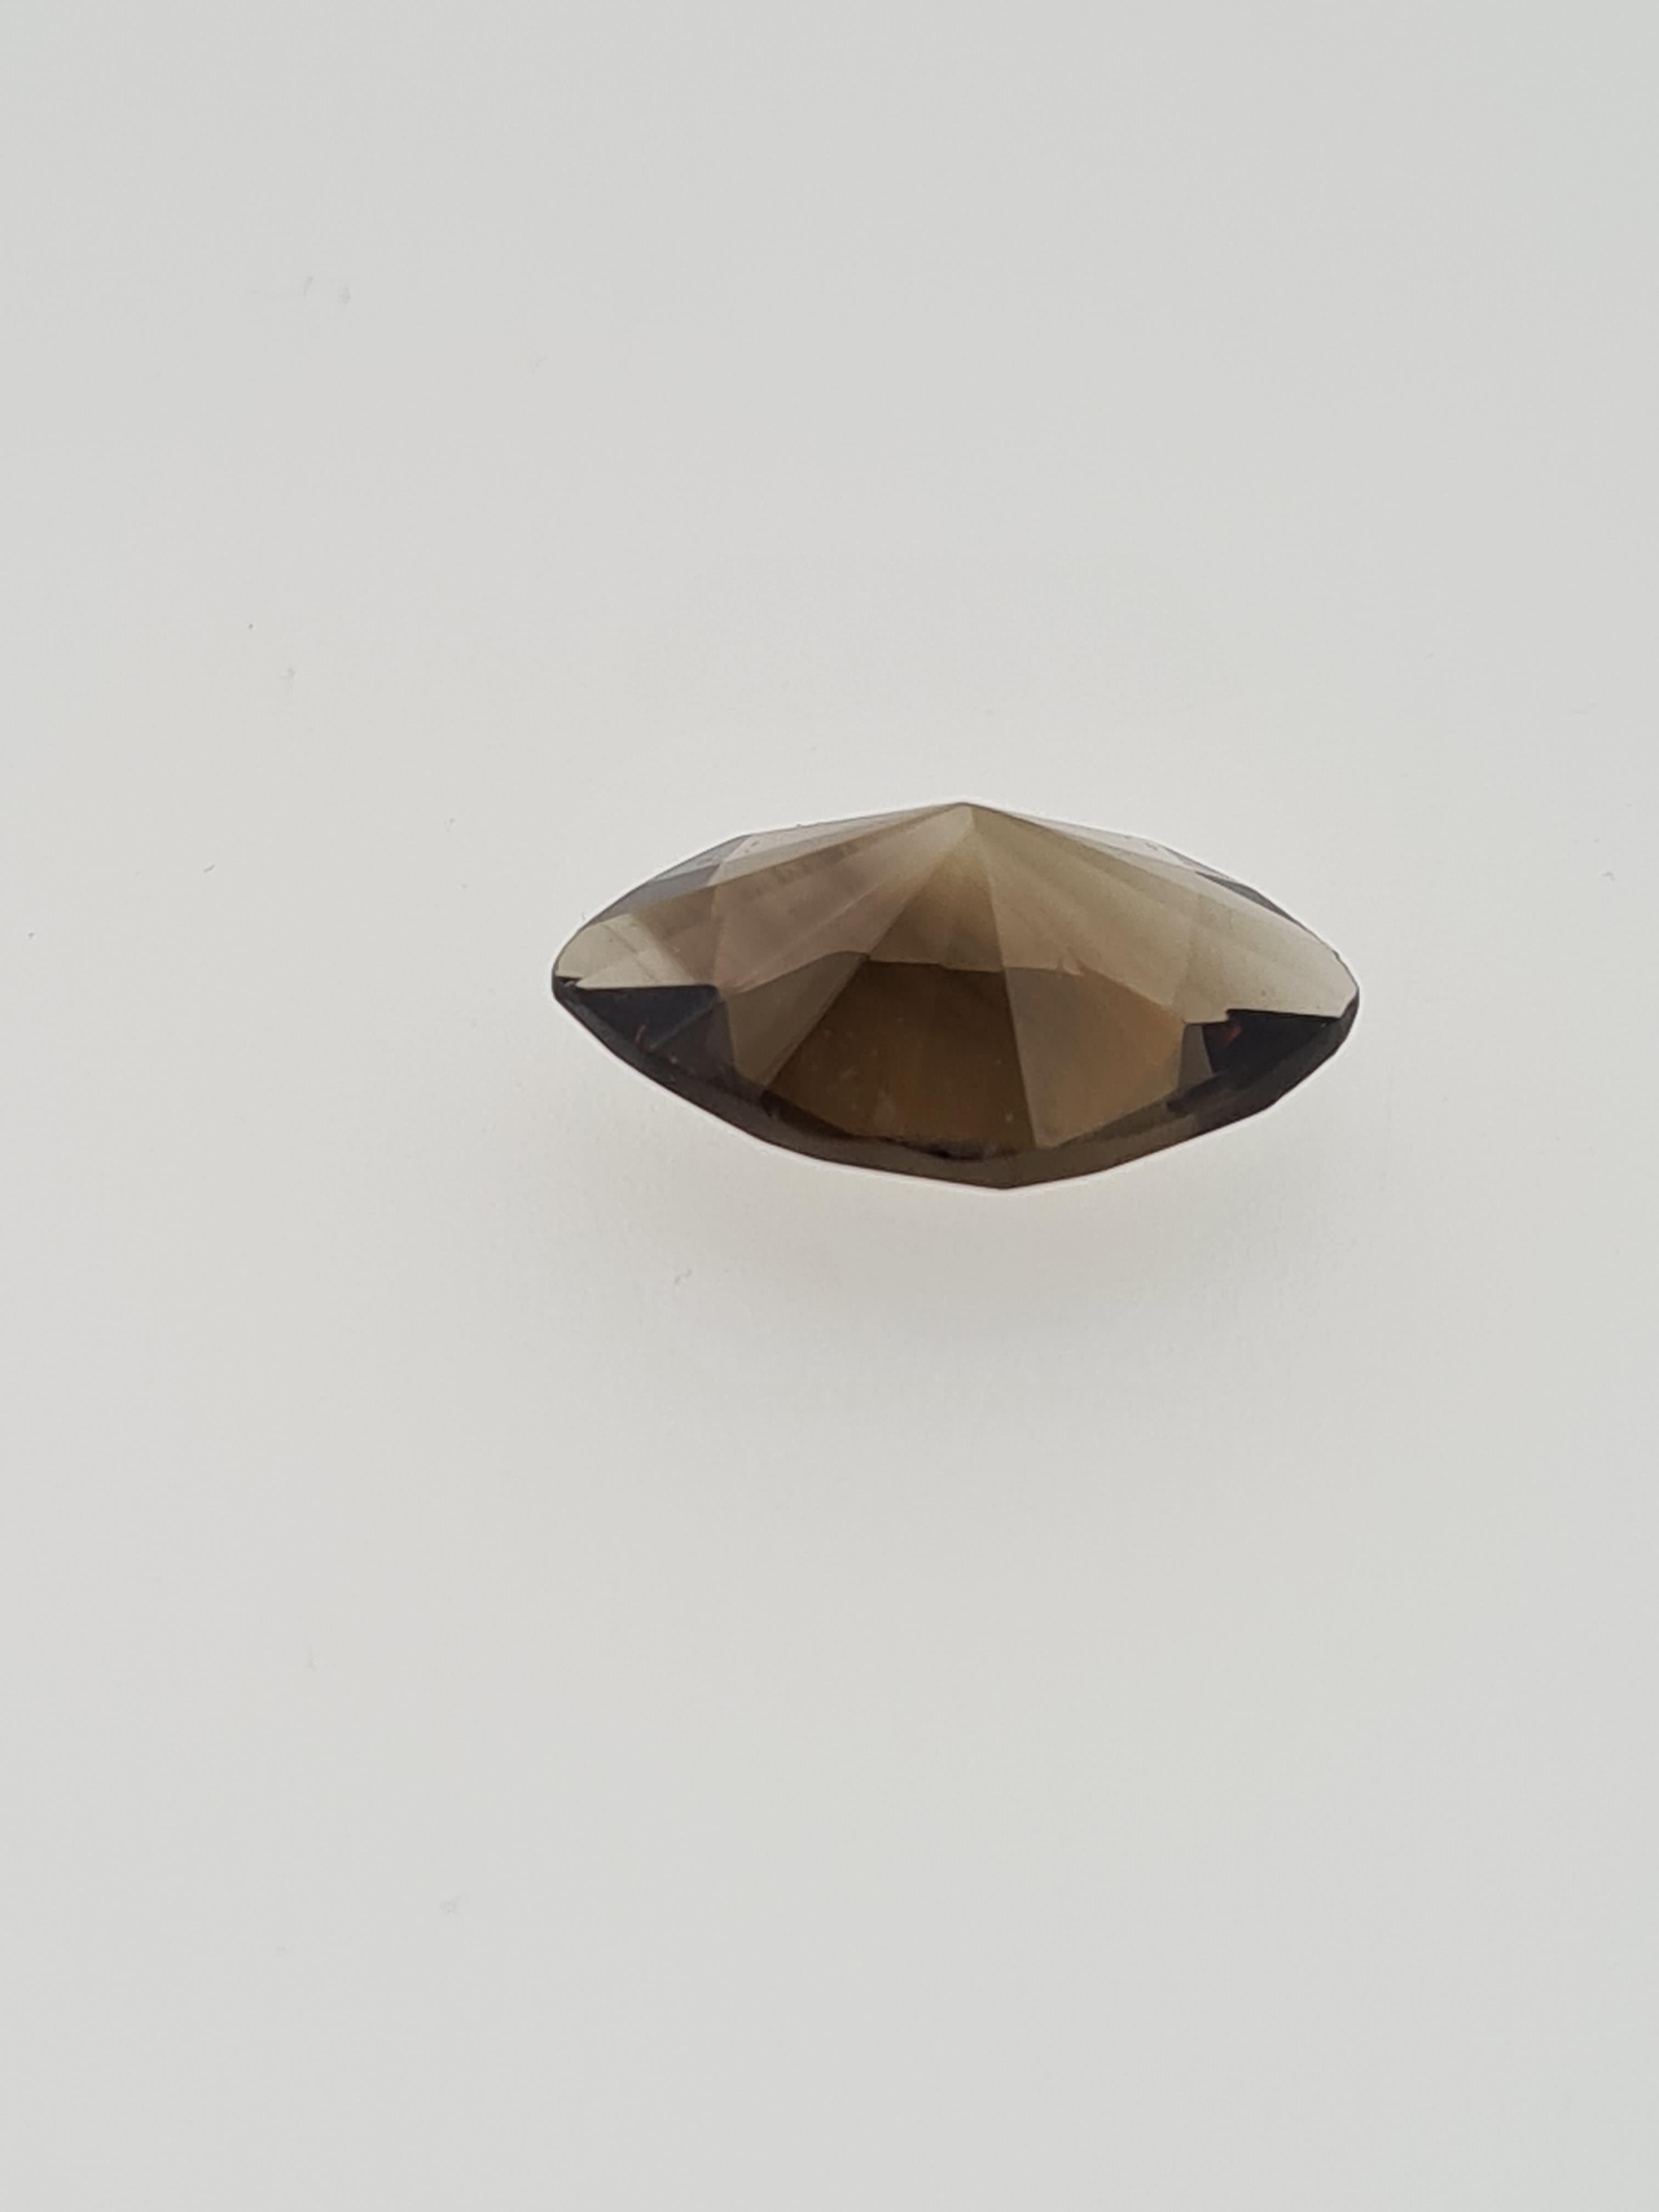 Smokey quartz marquise cut gem stone - Image 2 of 5